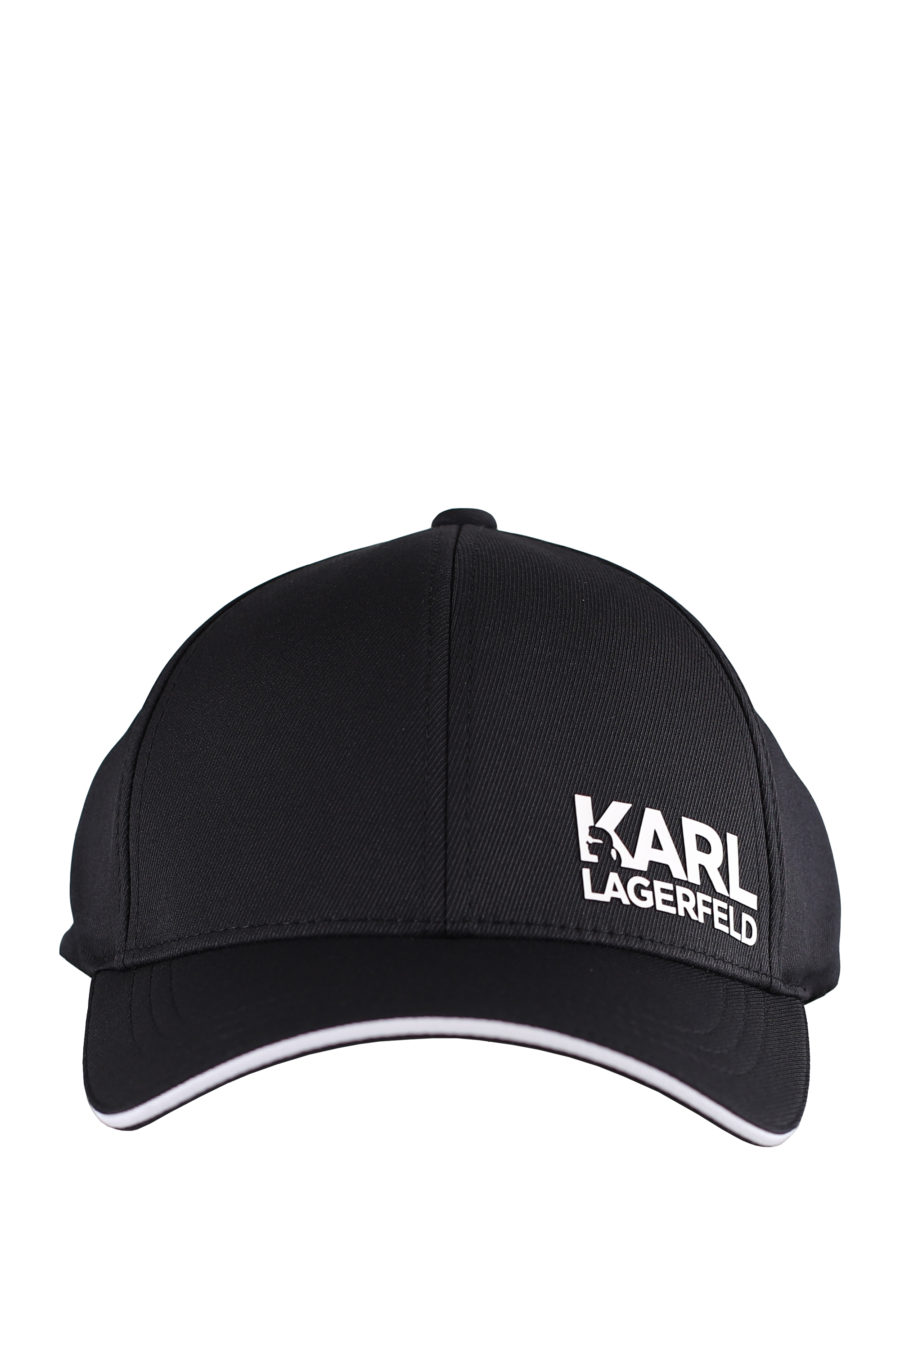 Gorra negra con logo "Karl" en blanco - IMG 9593